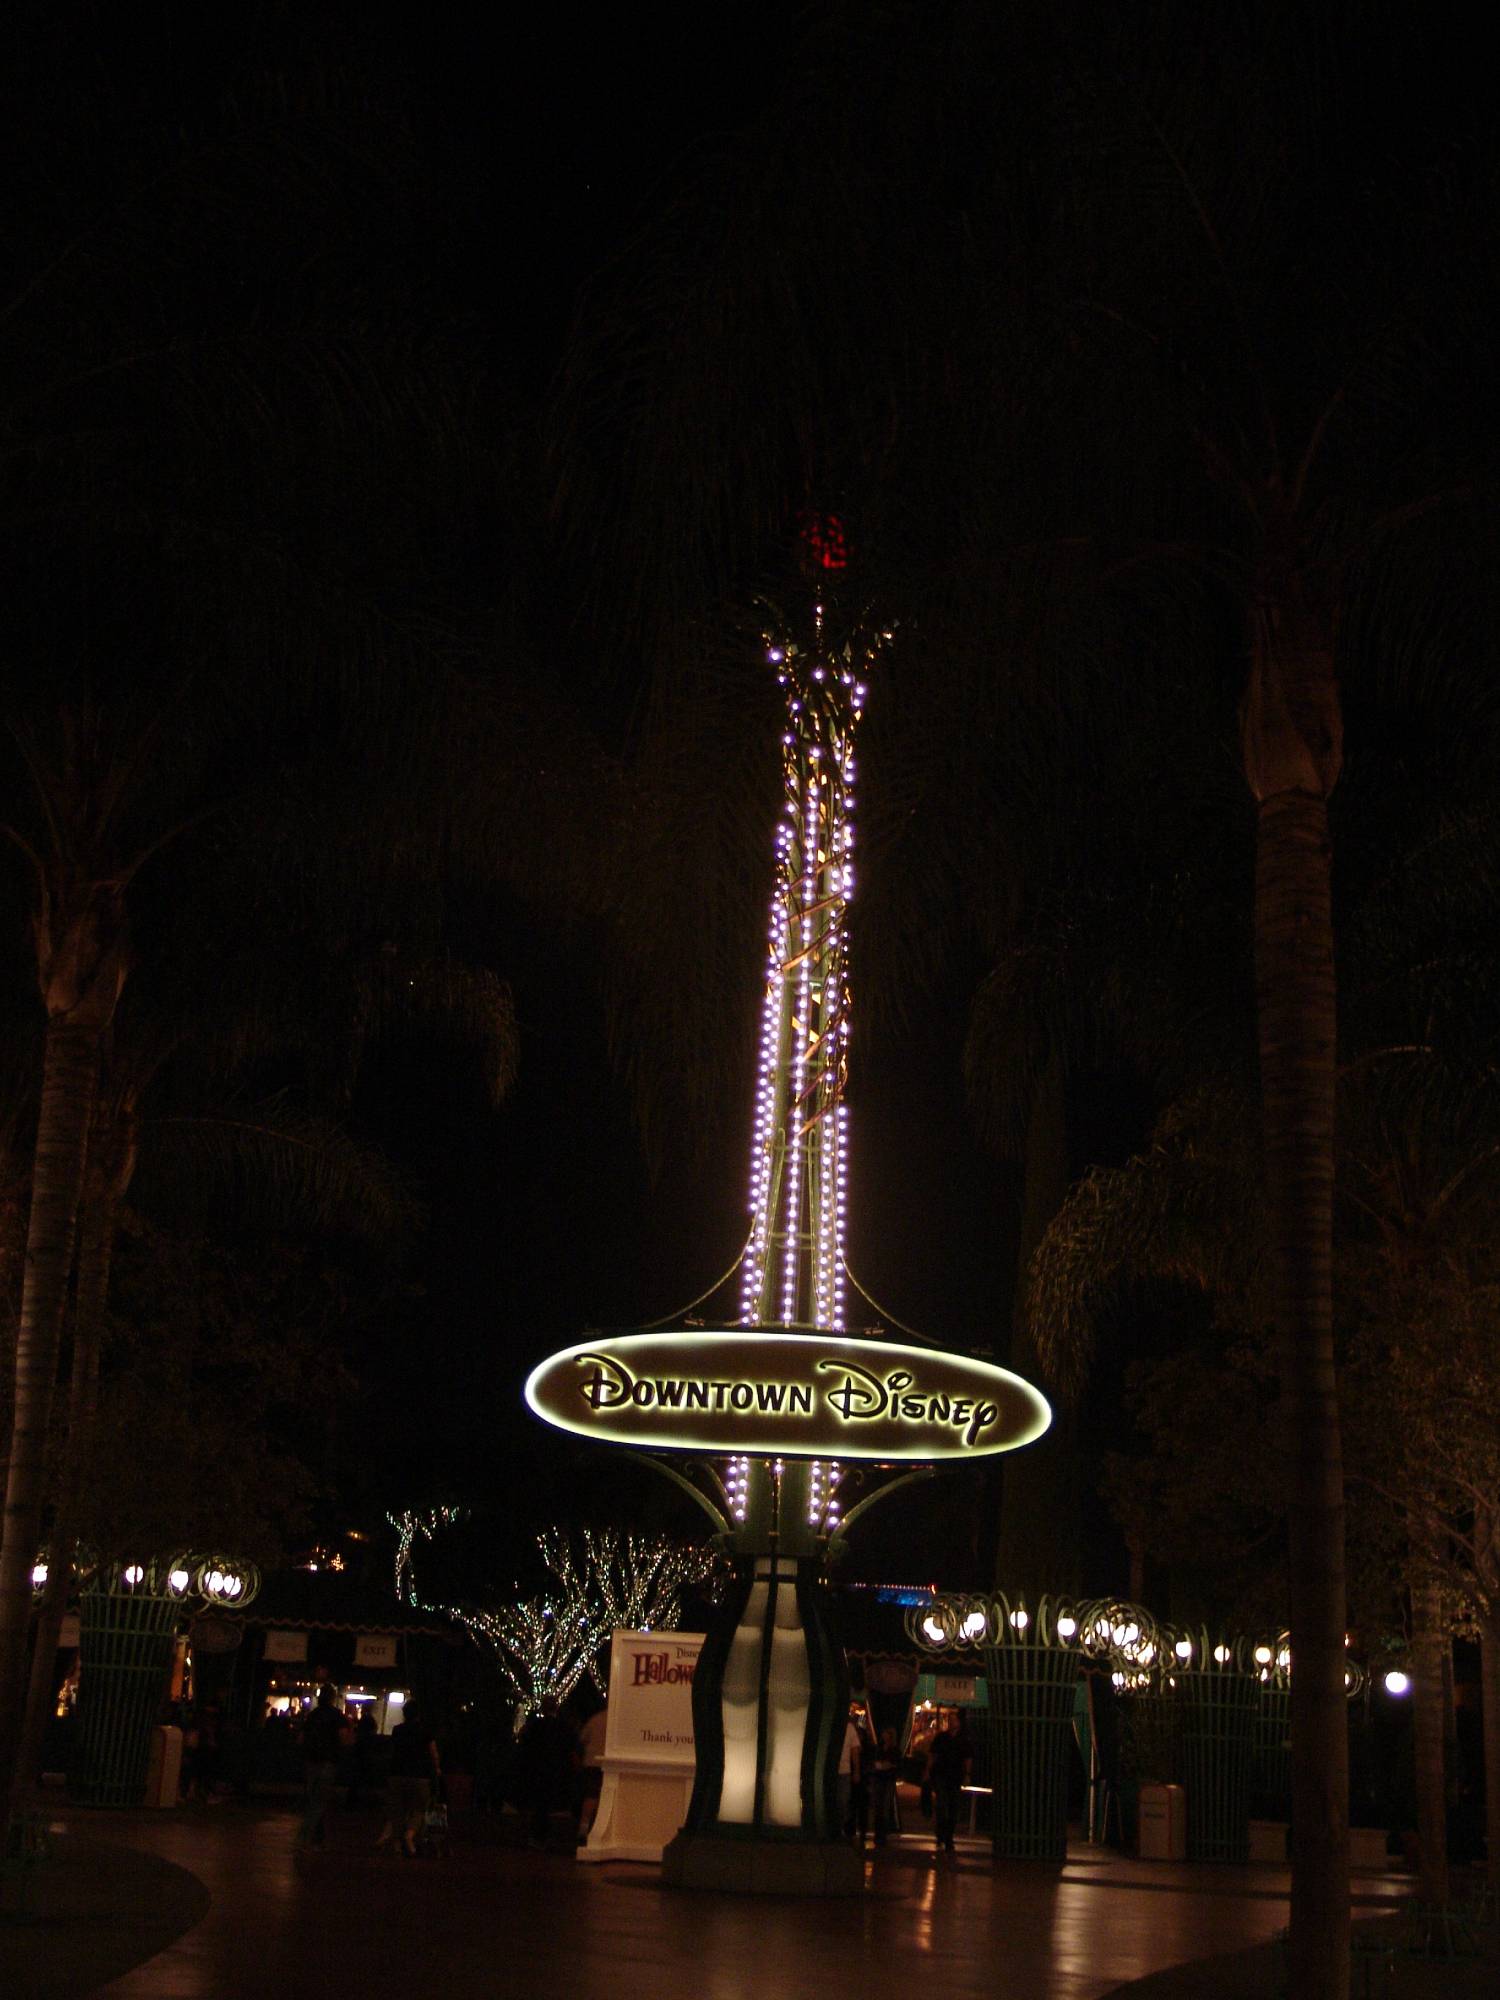 Downtown Disney - entrance at night